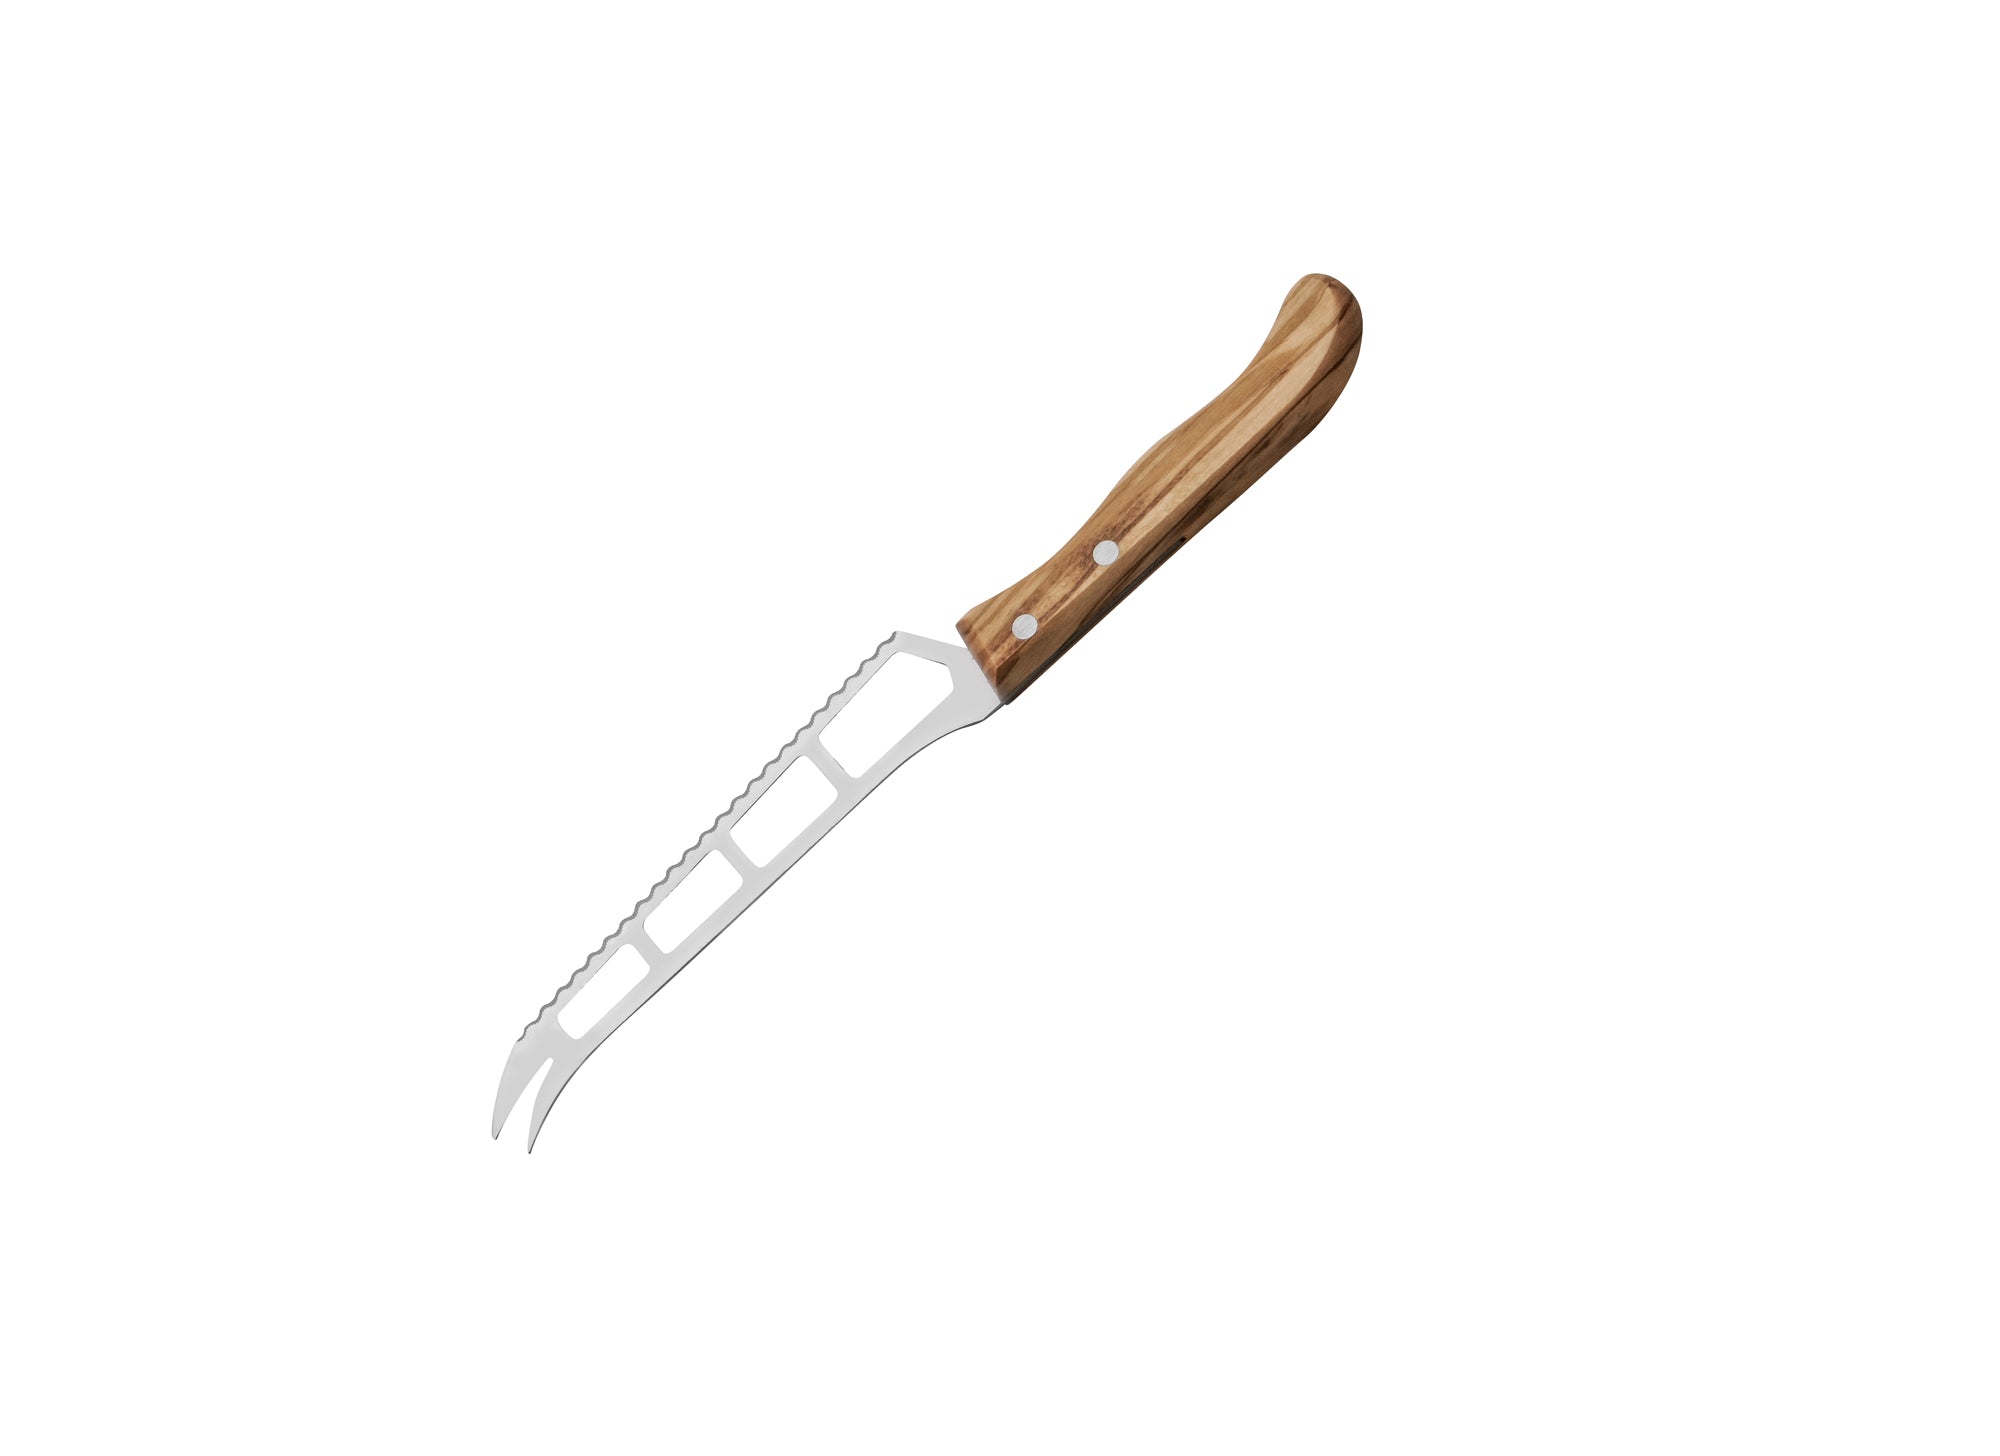 Cheese knife, olive wood handle